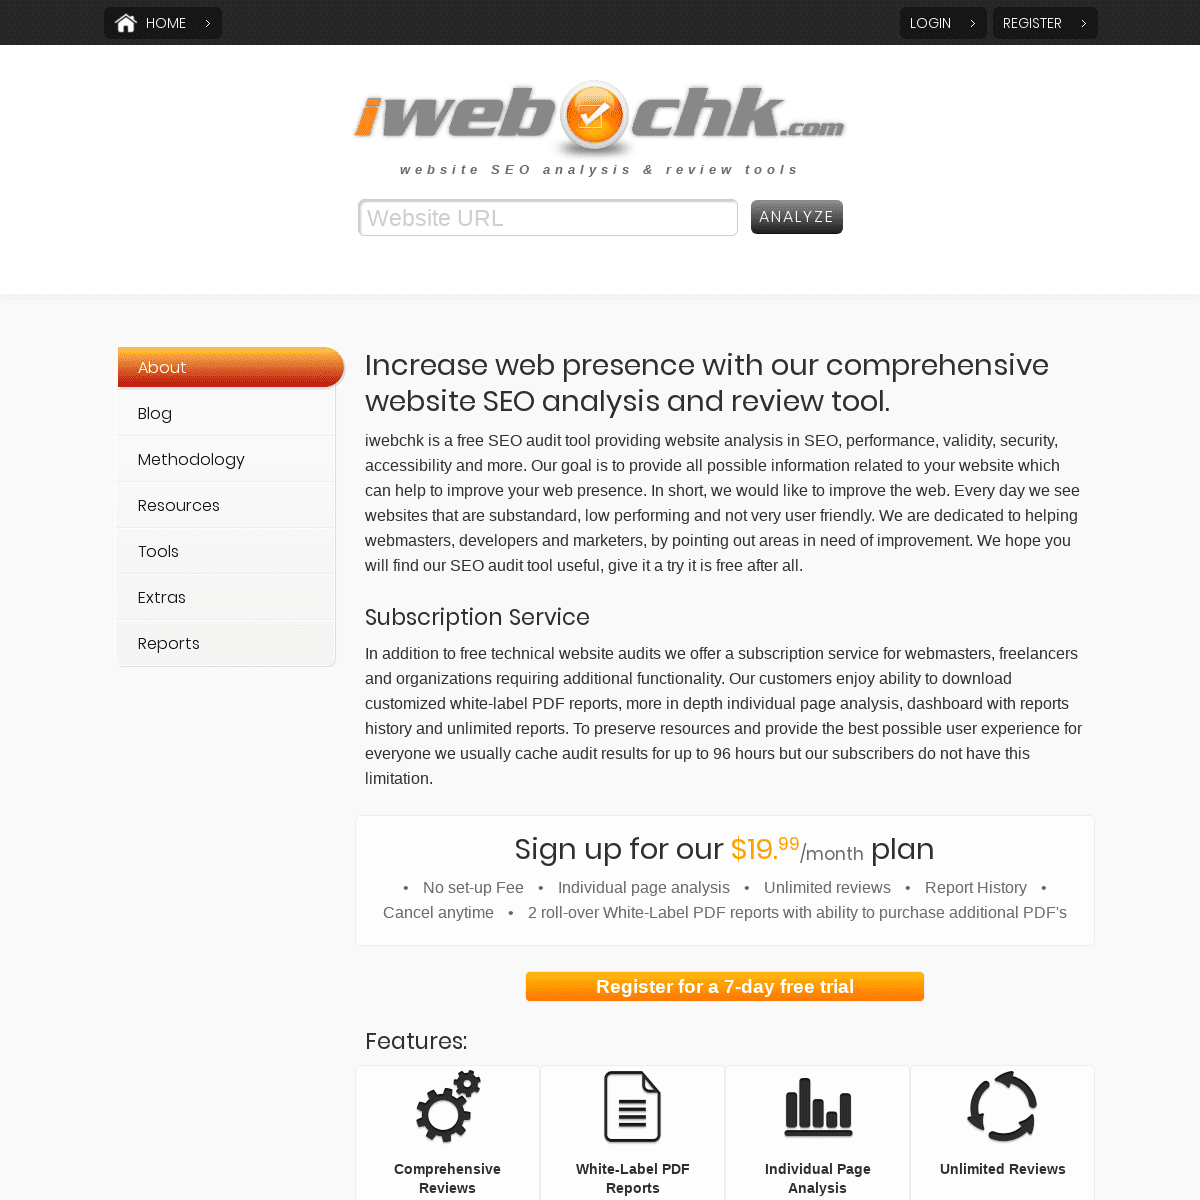 SEO Audit and Website Analysis Tools | iwebchk